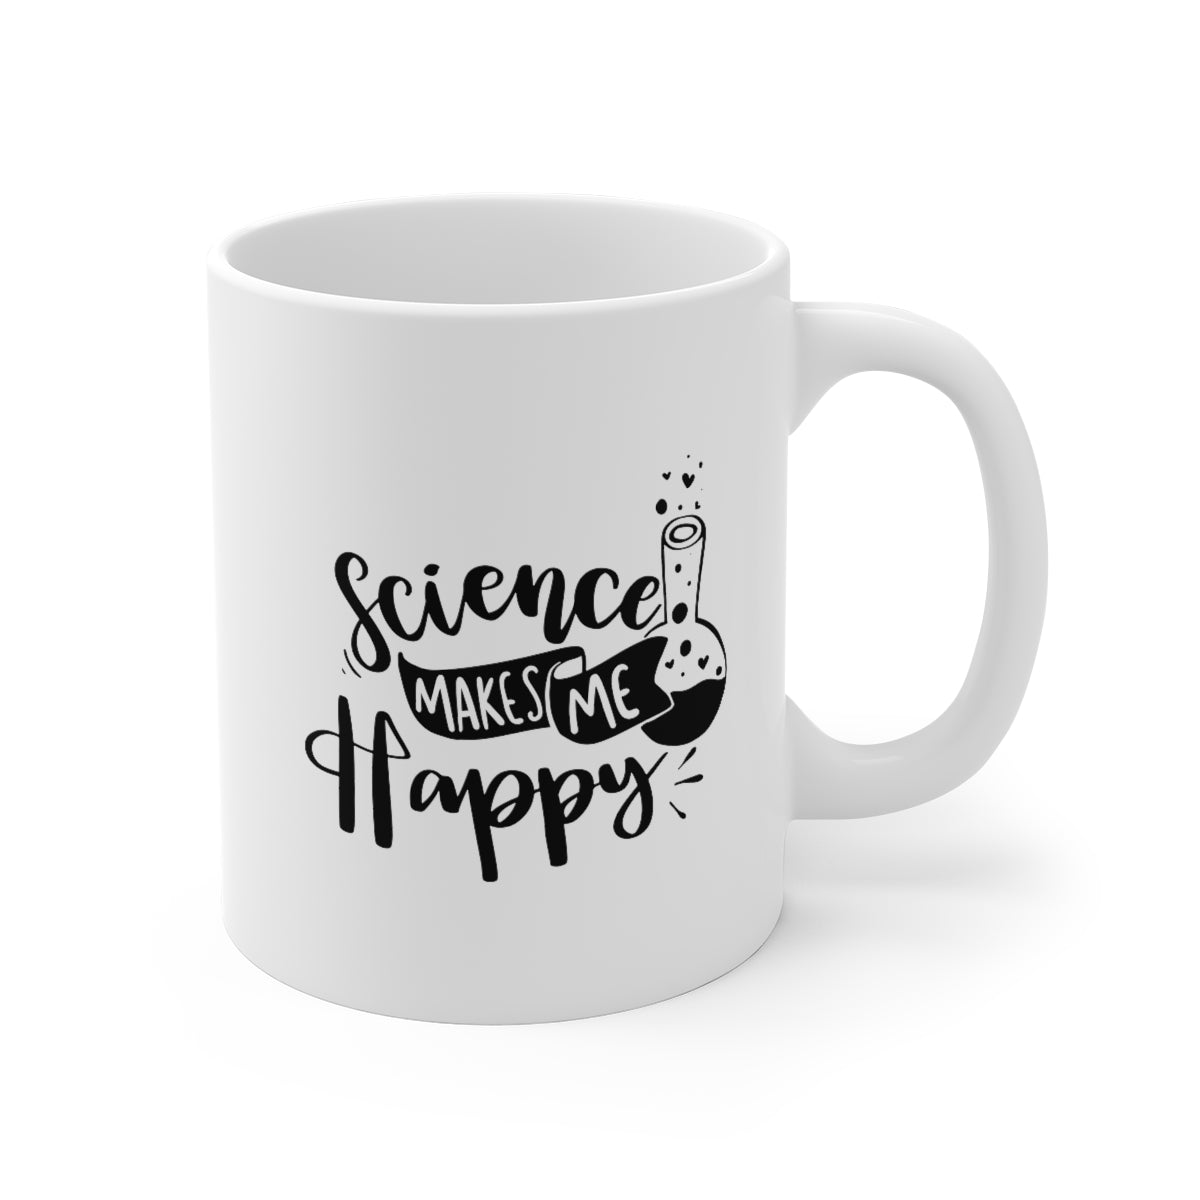 Science Makes Me Happy Mug